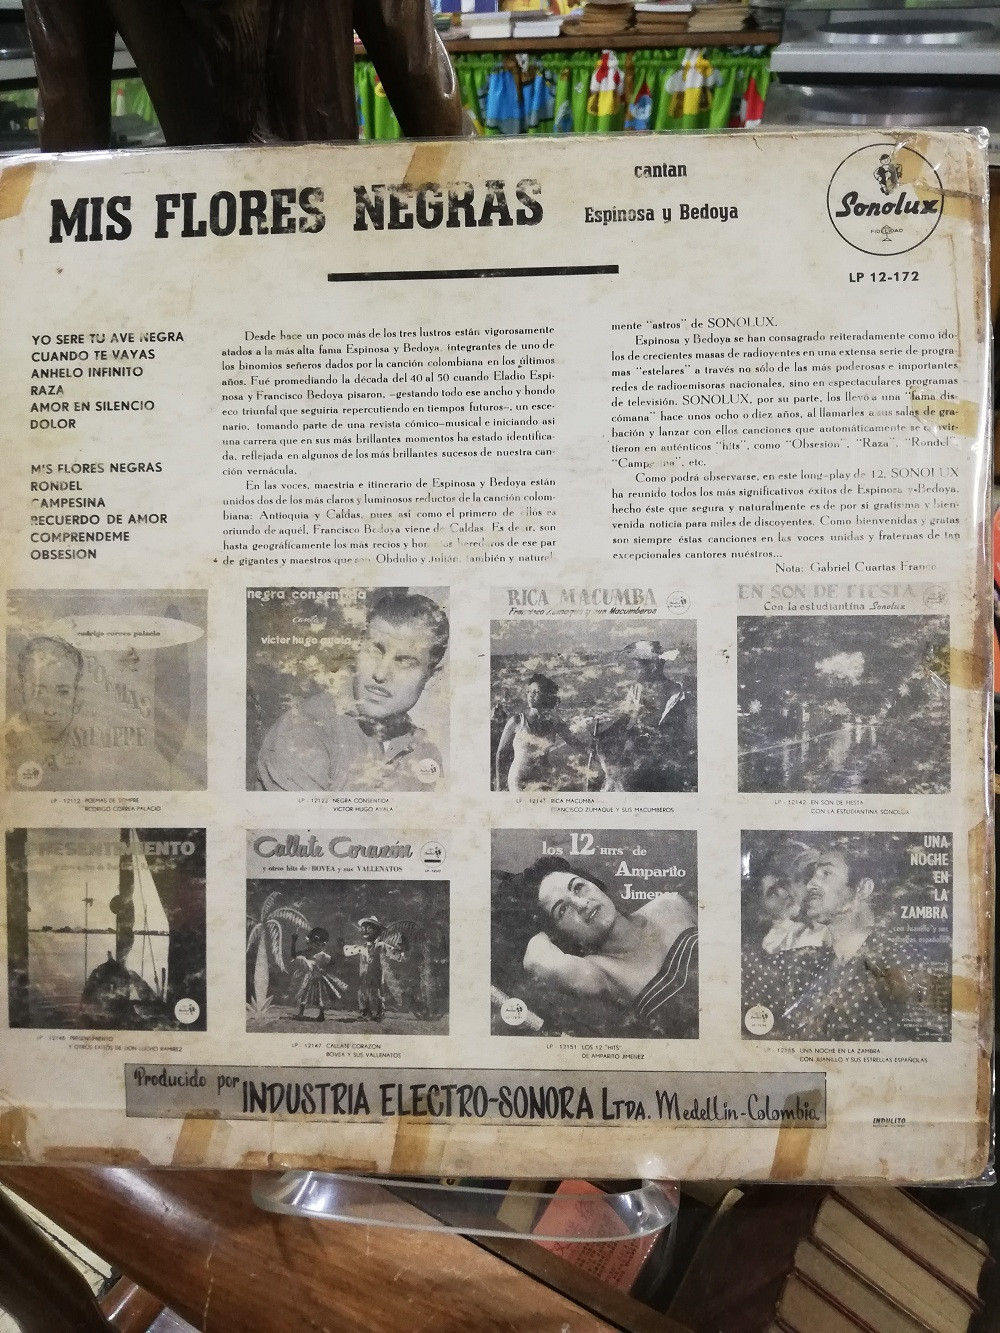 Imagen LP ESPINOSA Y BEDOYA - MIS FLORES NEGRAS 2